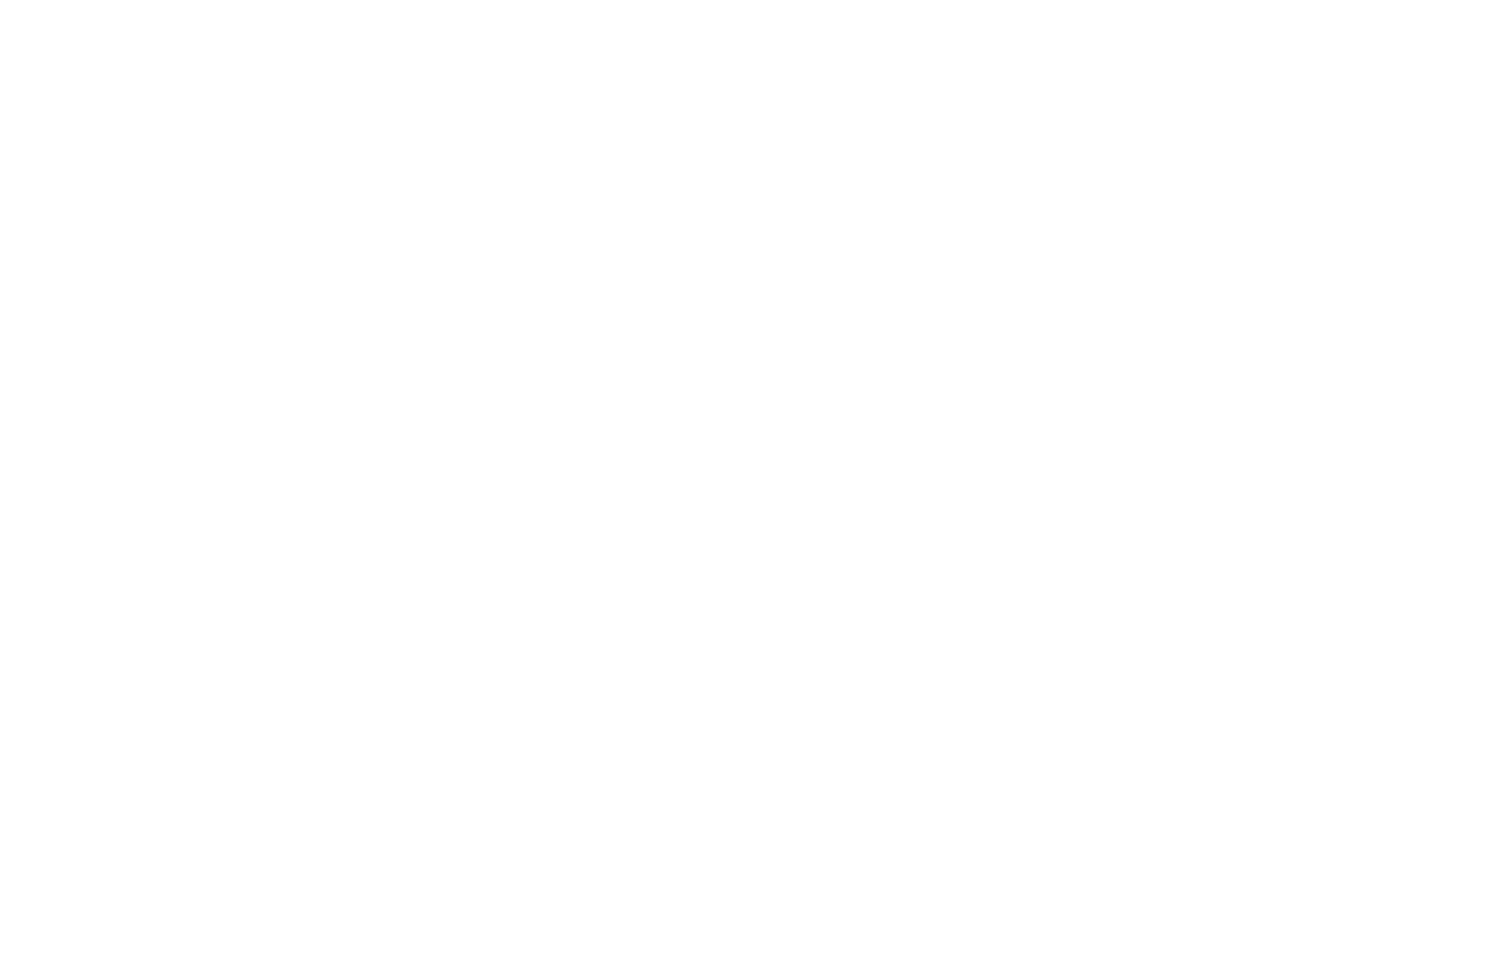 FootageFest